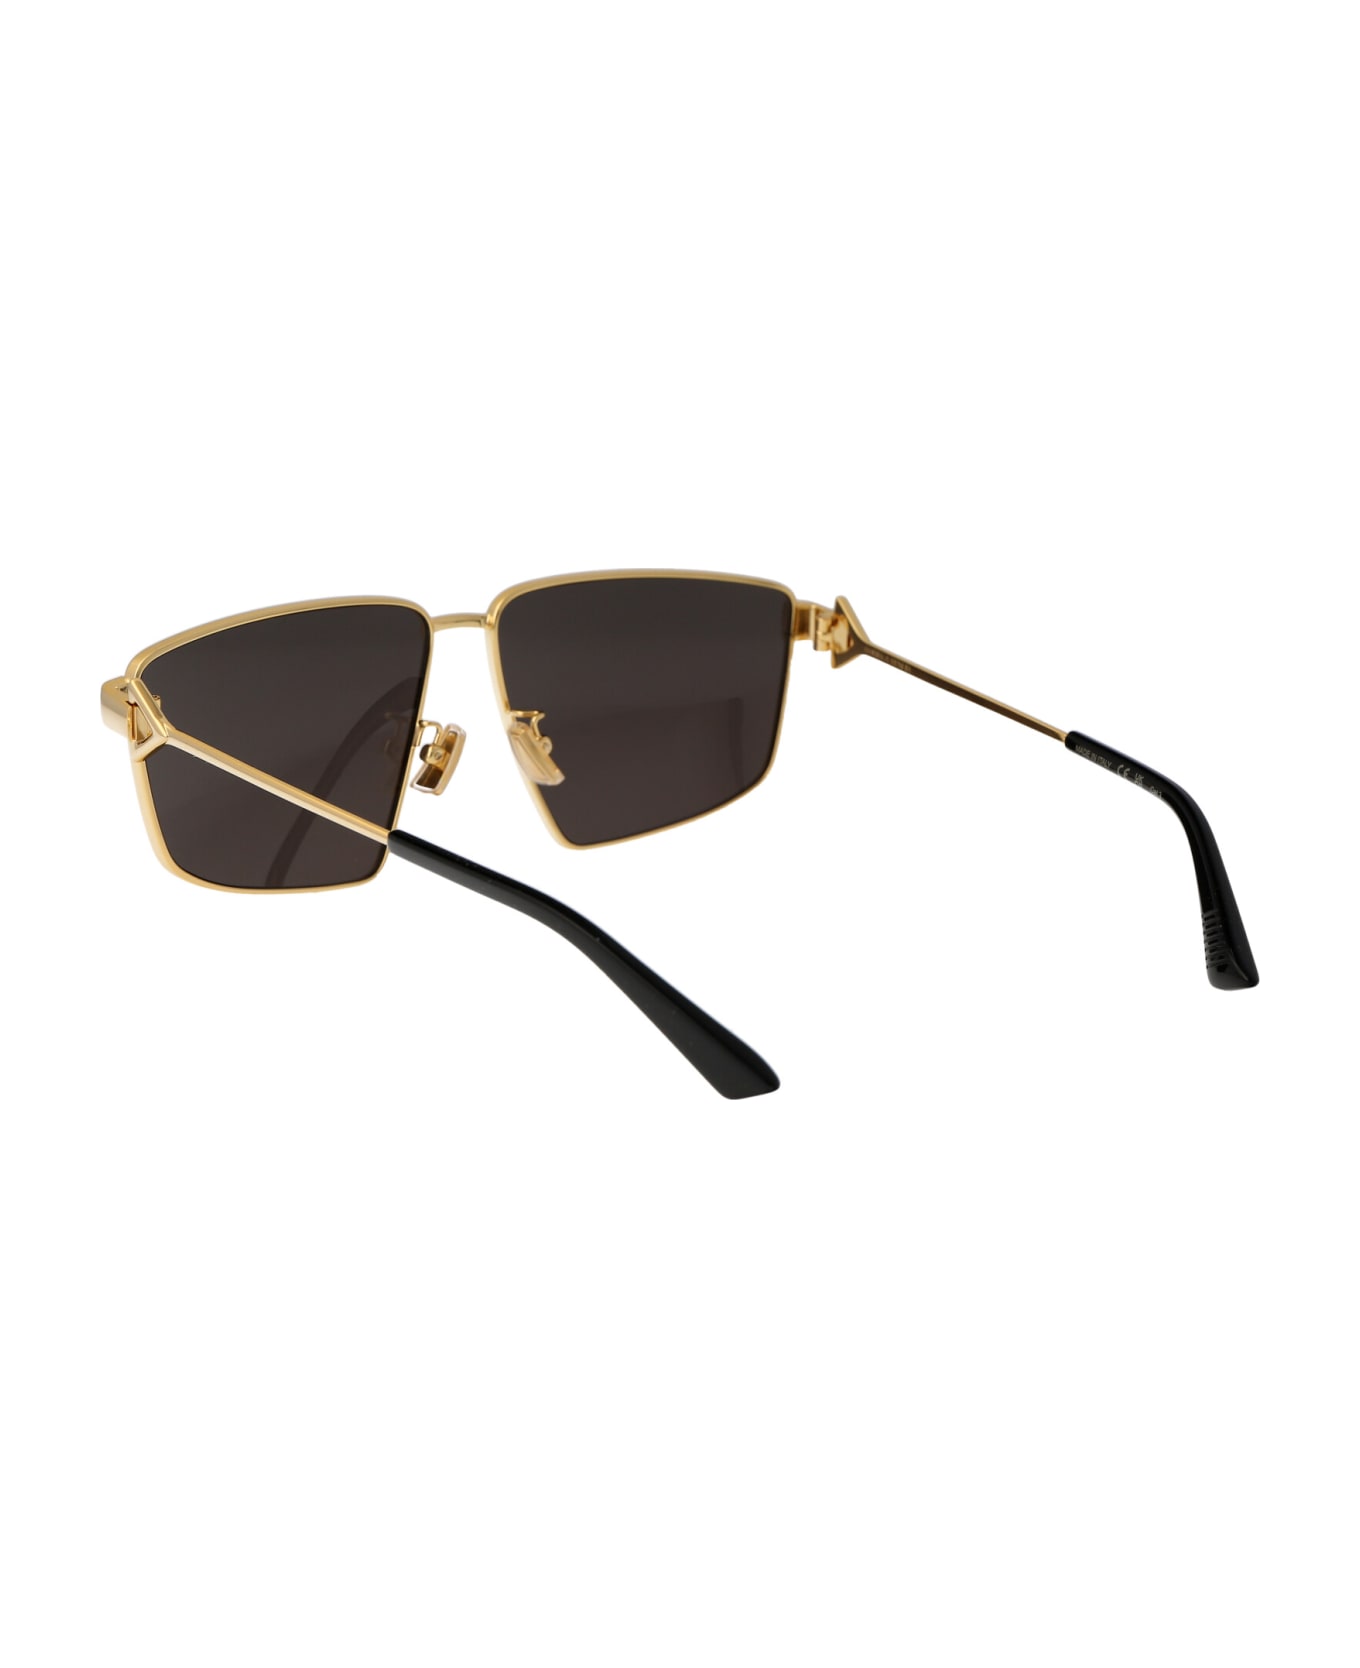 Bottega Veneta Eyewear Bv1223s Sunglasses - 002 GOLD GOLD GREY